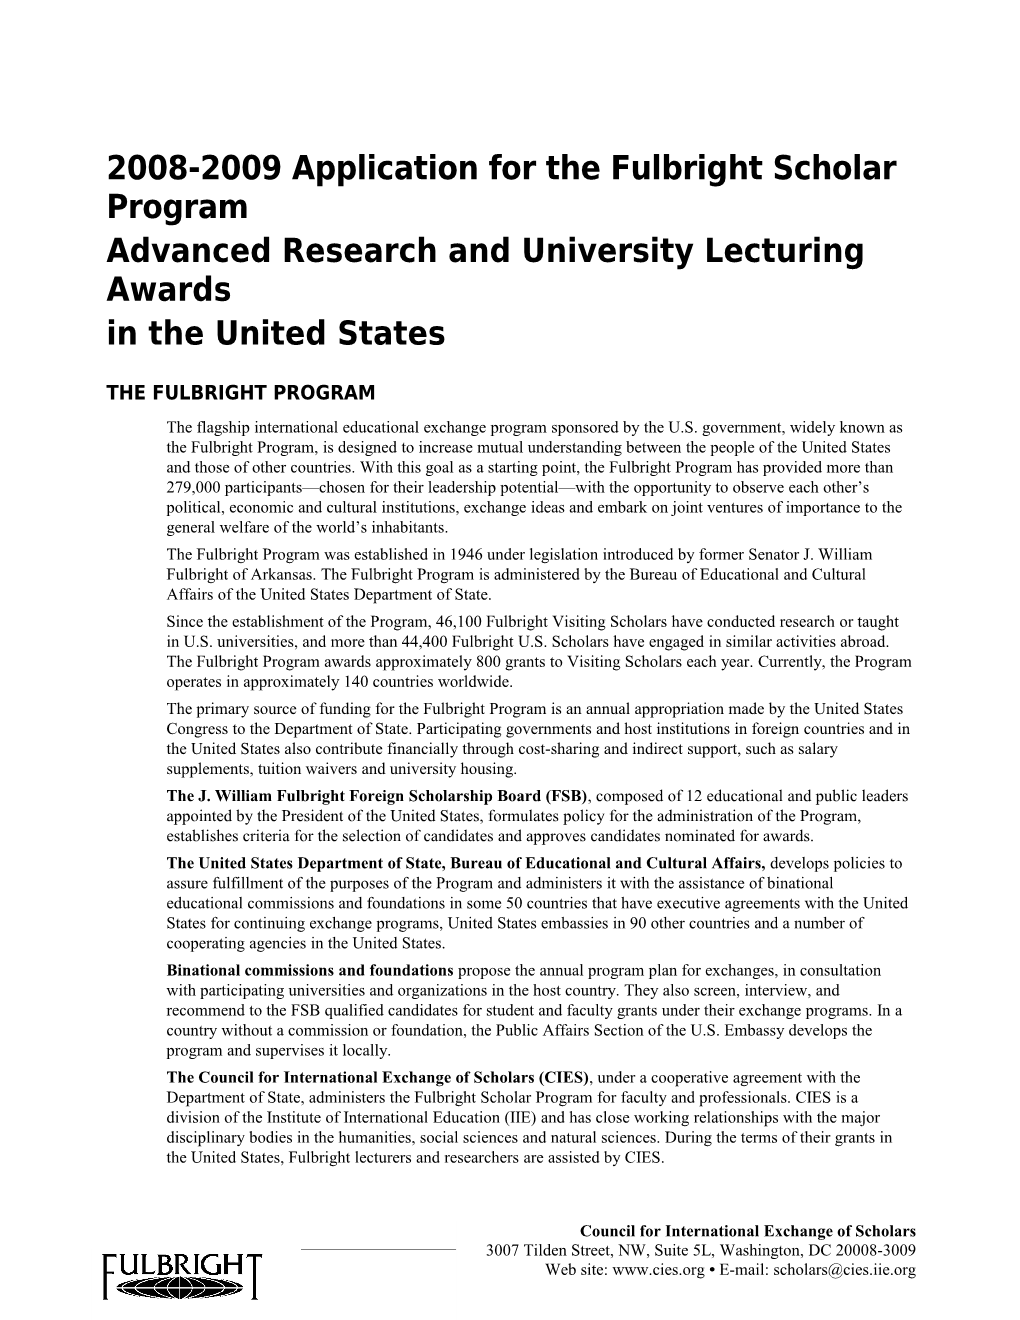 2008-2009 Application for the Fulbright Scholar Program